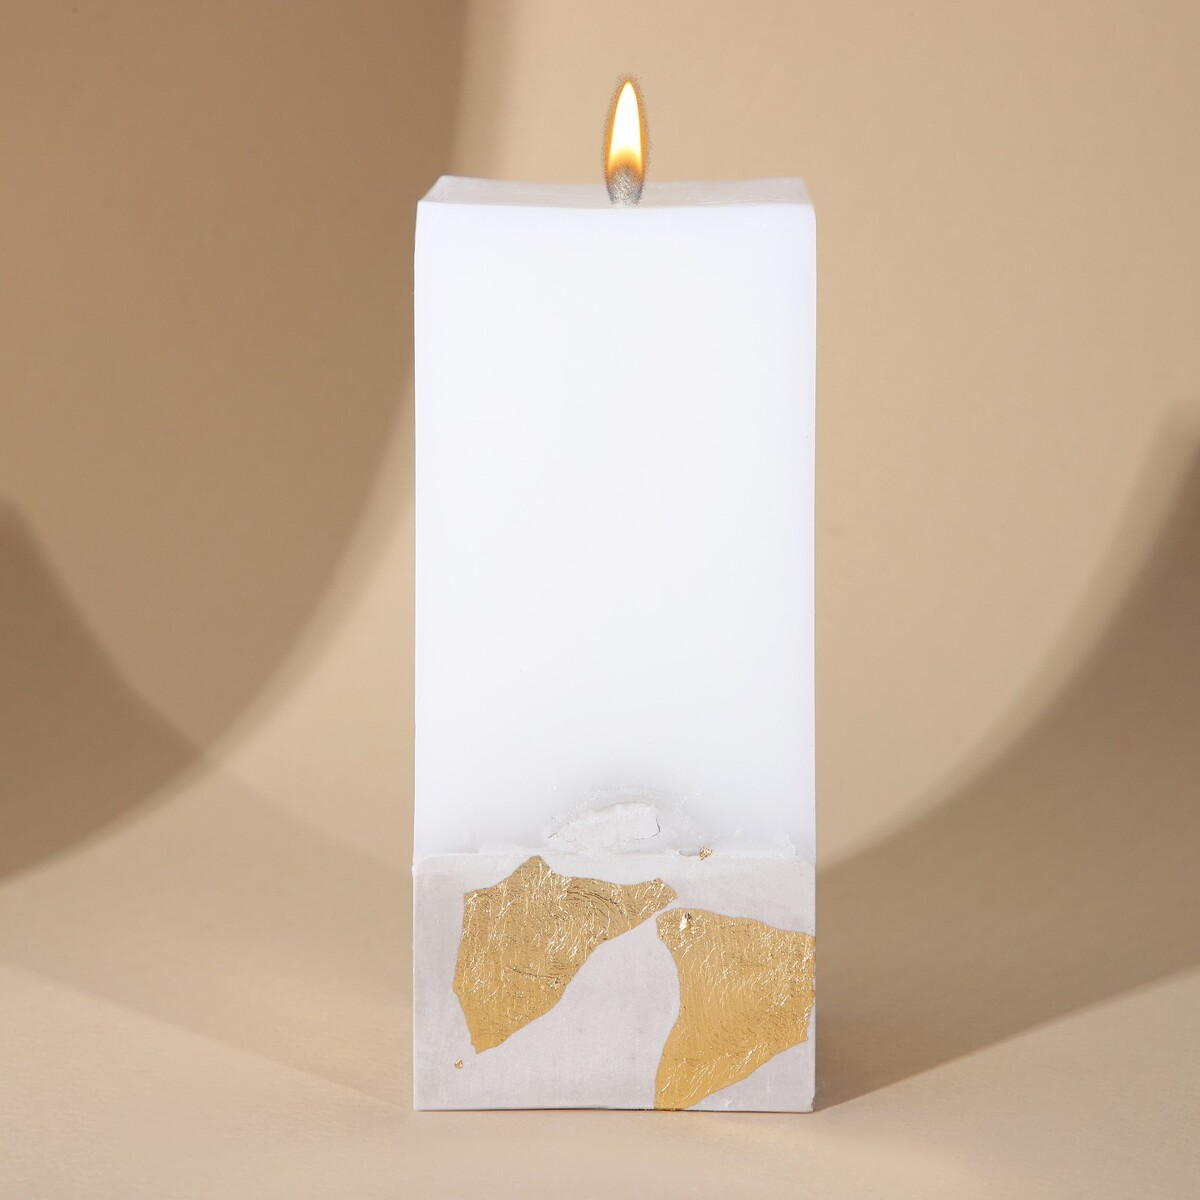 Свеча интерьерная белая с бетоном (поталь), 6 х 6 х 14 см свеча интерьерная белая с бетоном 14 х 5 см